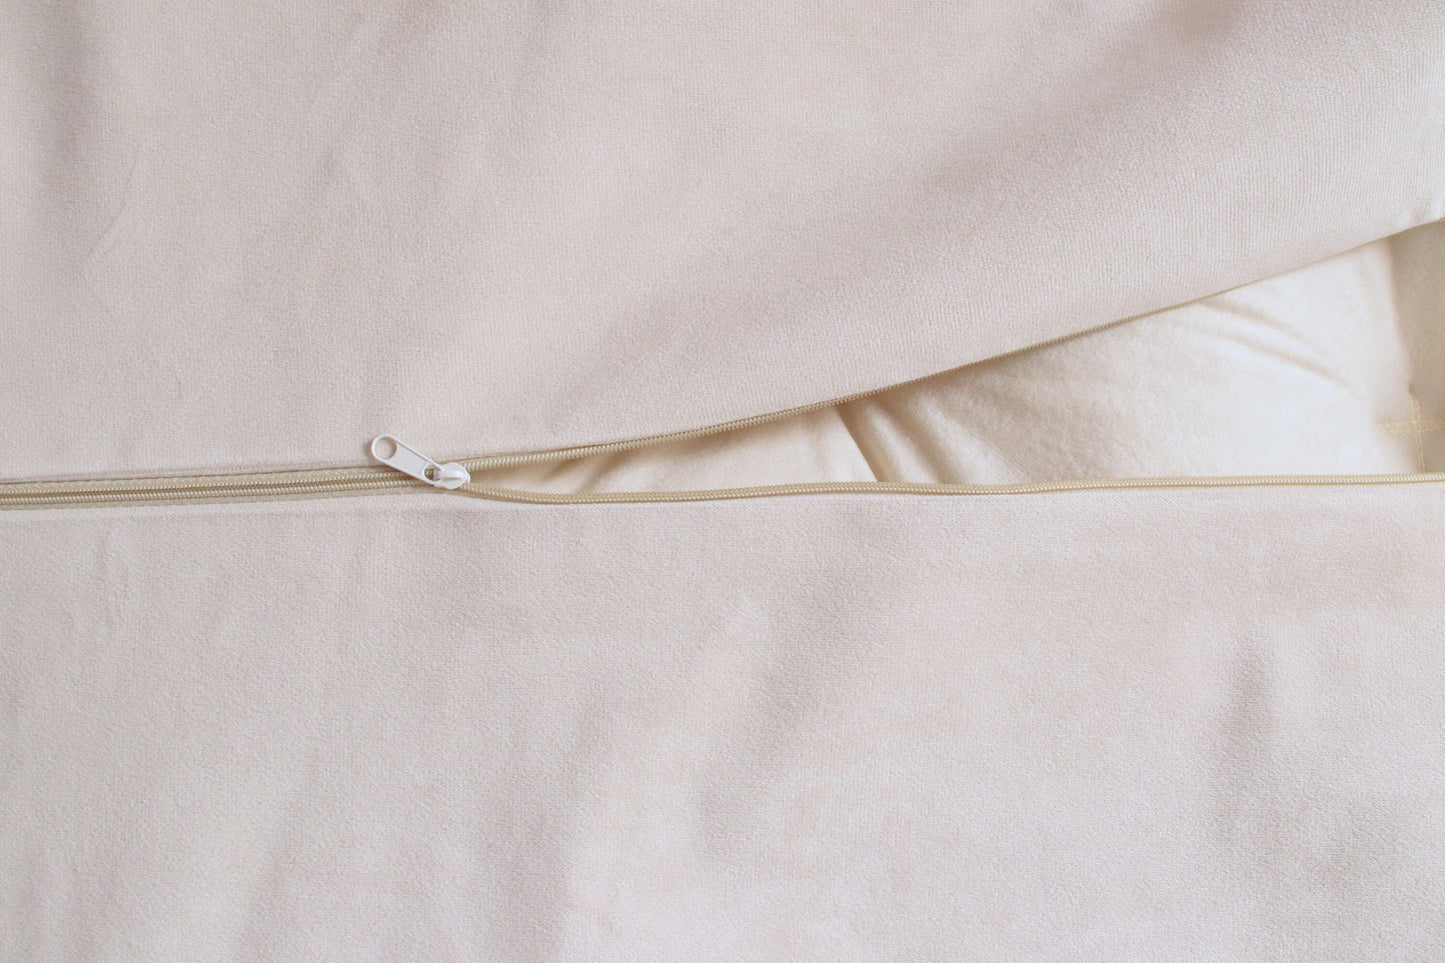 Custom Cushion Cover | Round Velvet Pillowcase | Custom Pillow Case | Zippered and Washable Cover